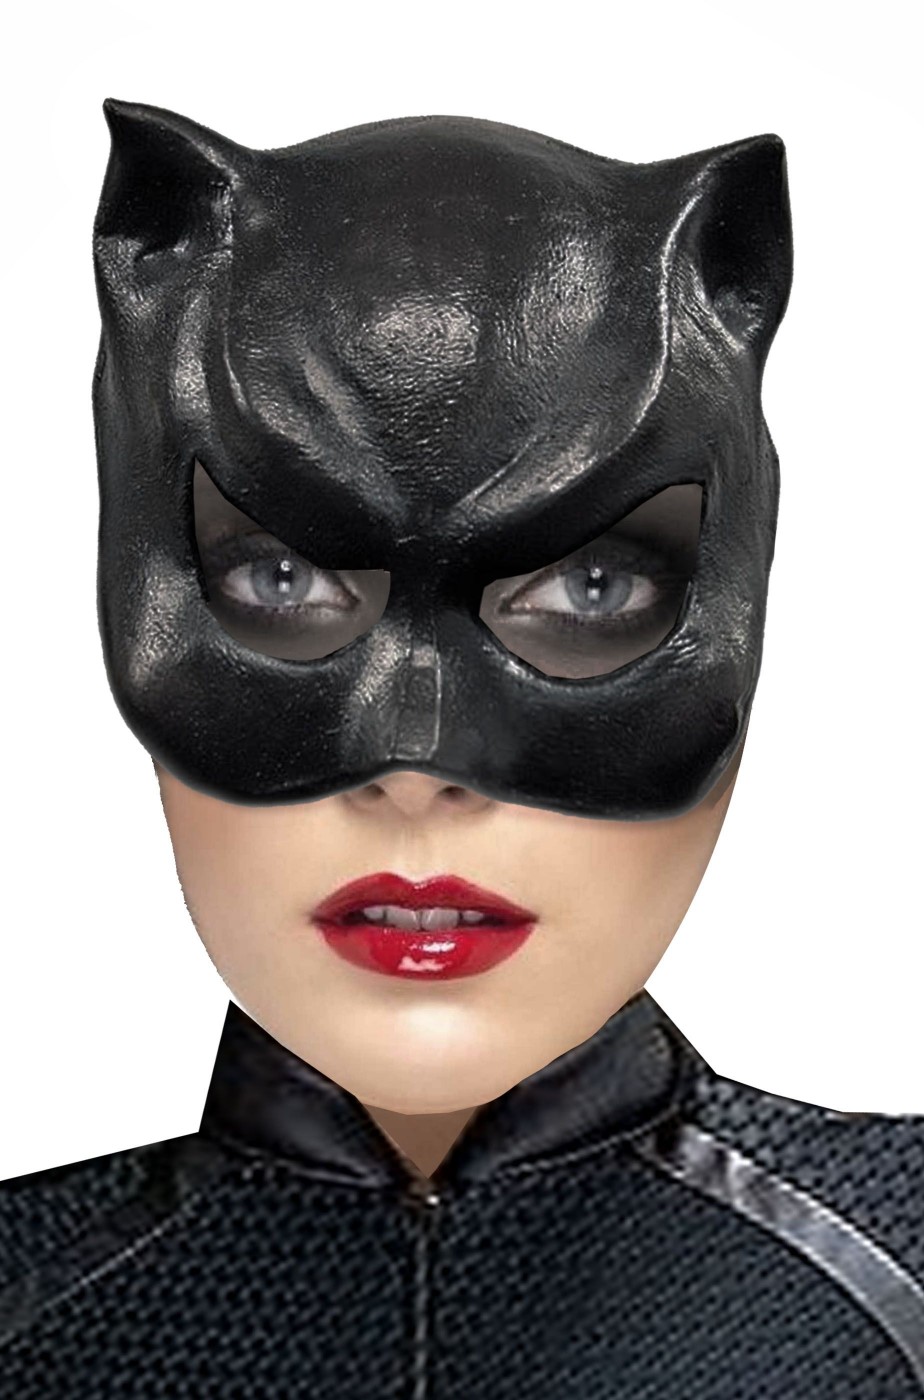 Maschera da Catwoman nera donna di di gomma di lattice bellissima